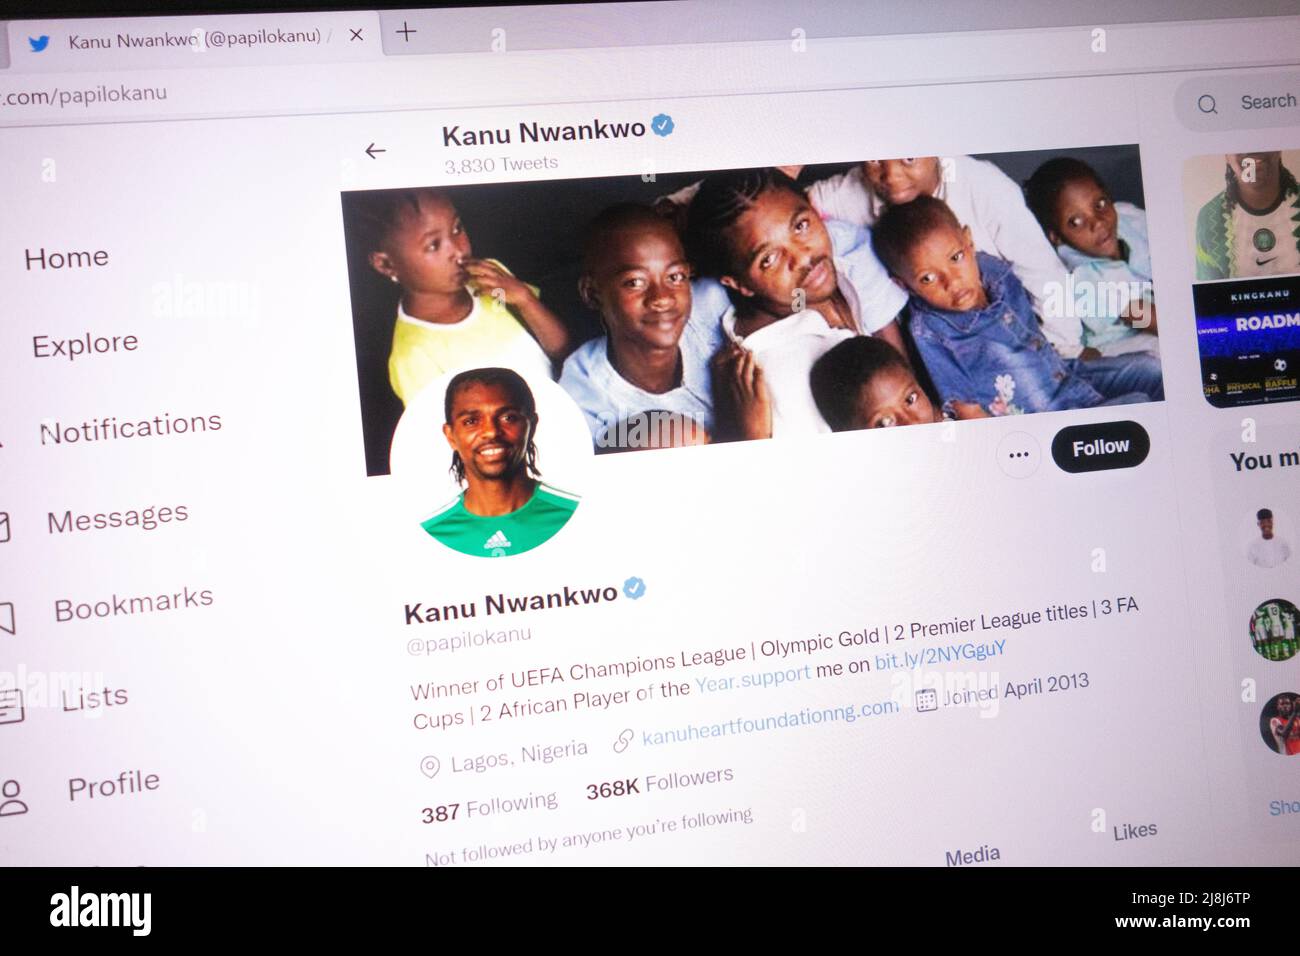 KONSKIE, POLAND - May 14, 2022: Nwankwo Kanu official Twitter account displayed on laptop screen Stock Photo